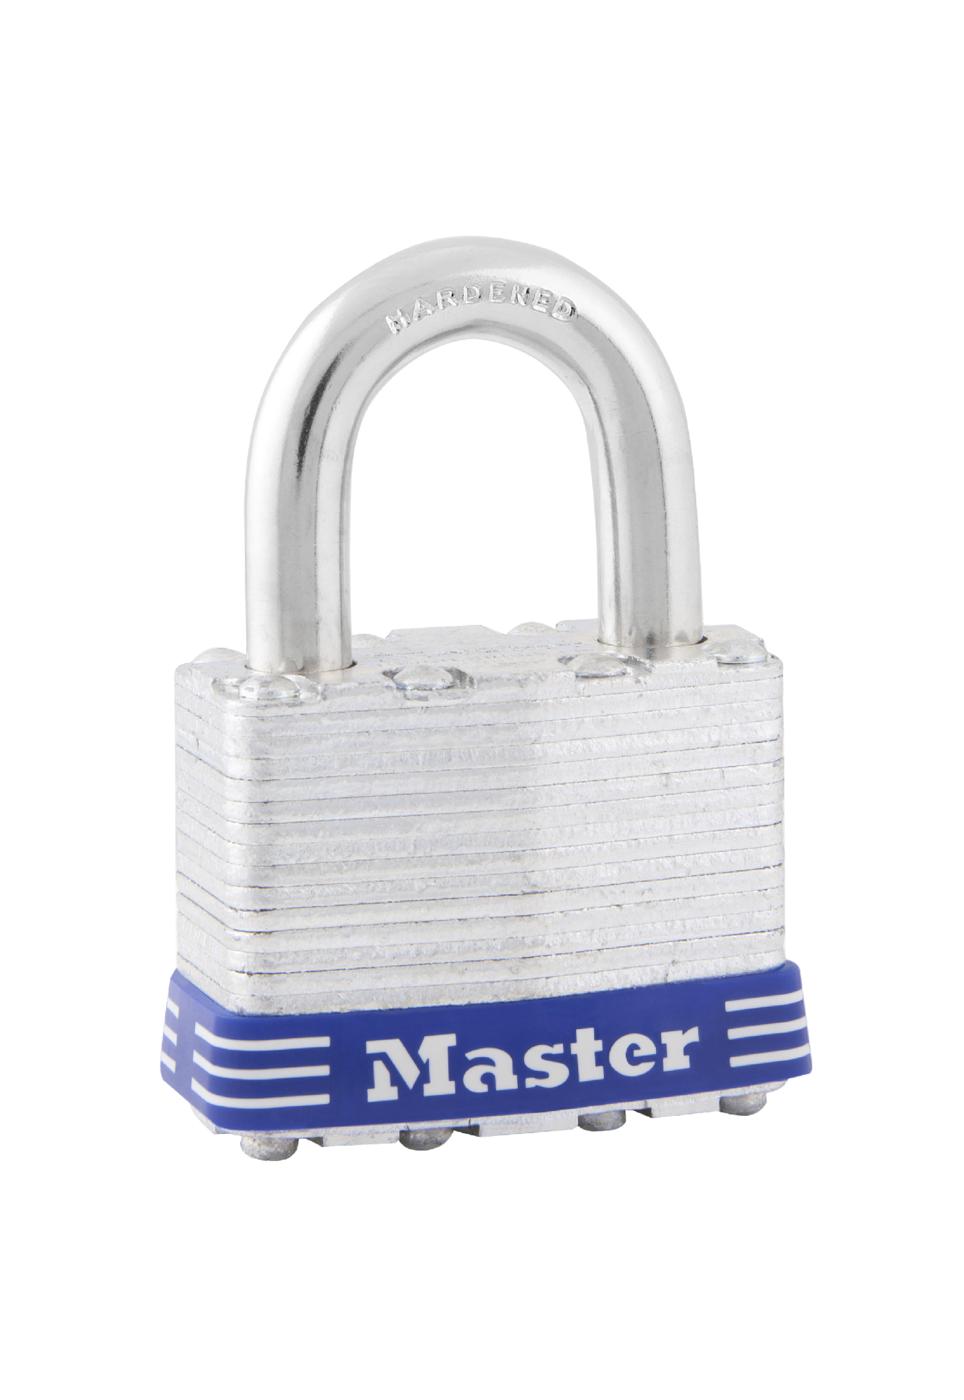 Master Lock 1D Laminated Padlock; image 2 of 2